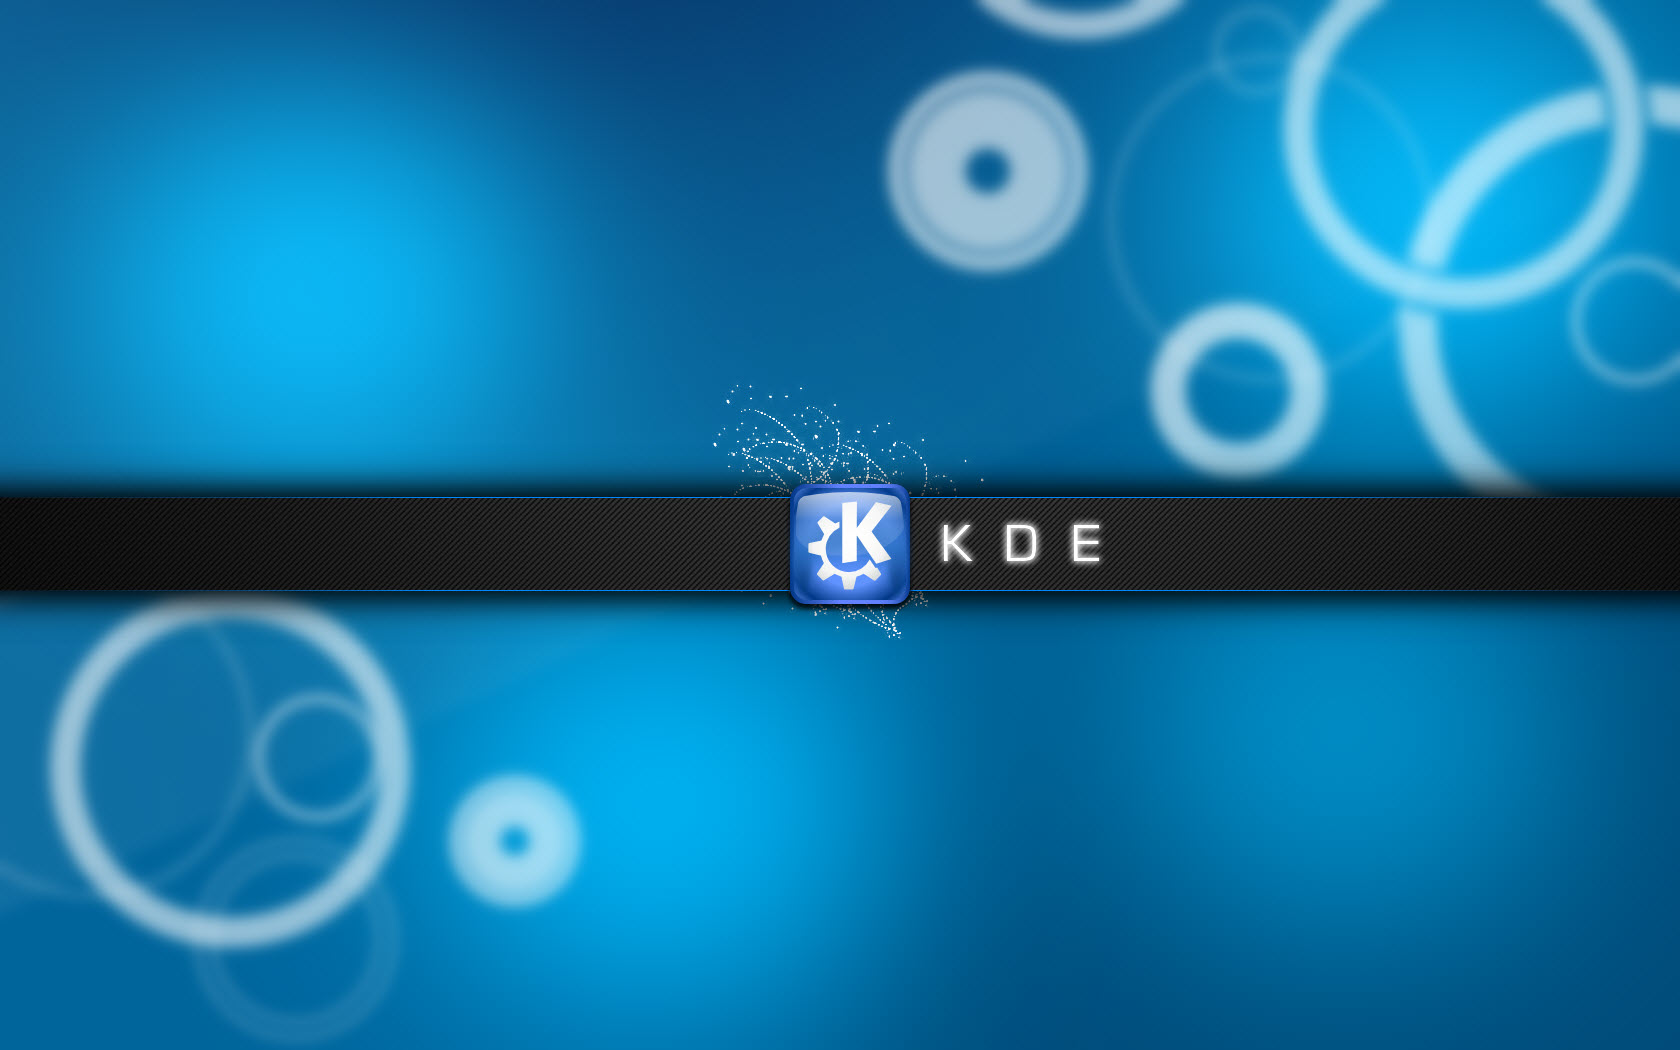 KDE Experience Freedom9505619978 - KDE Experience Freedom - Imagination, Freedom, Experience